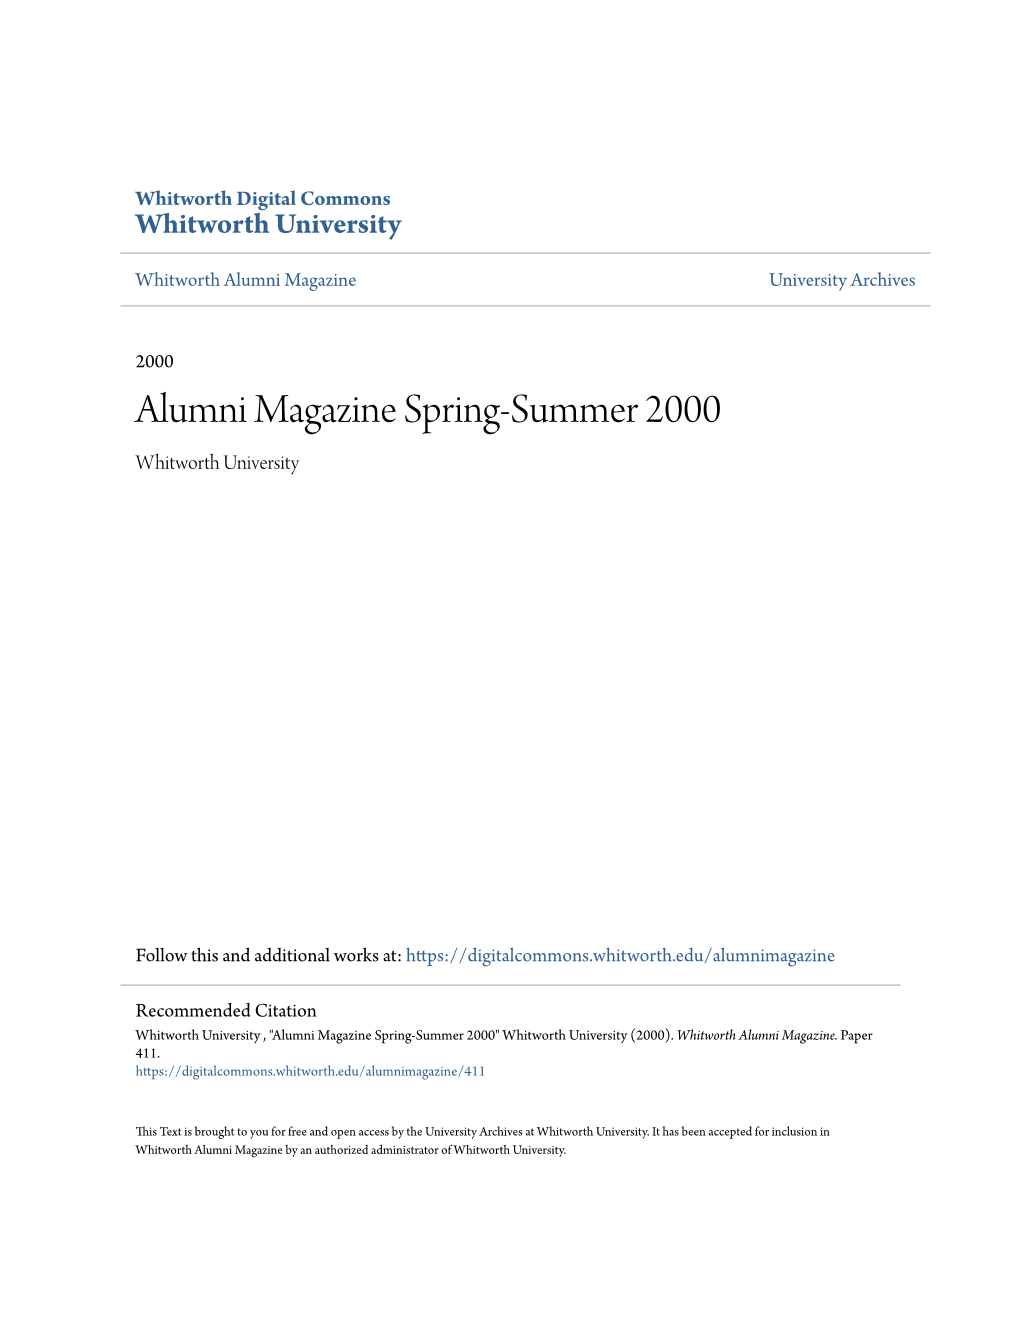 Alumni Magazine Spring-Summer 2000 Whitworth University